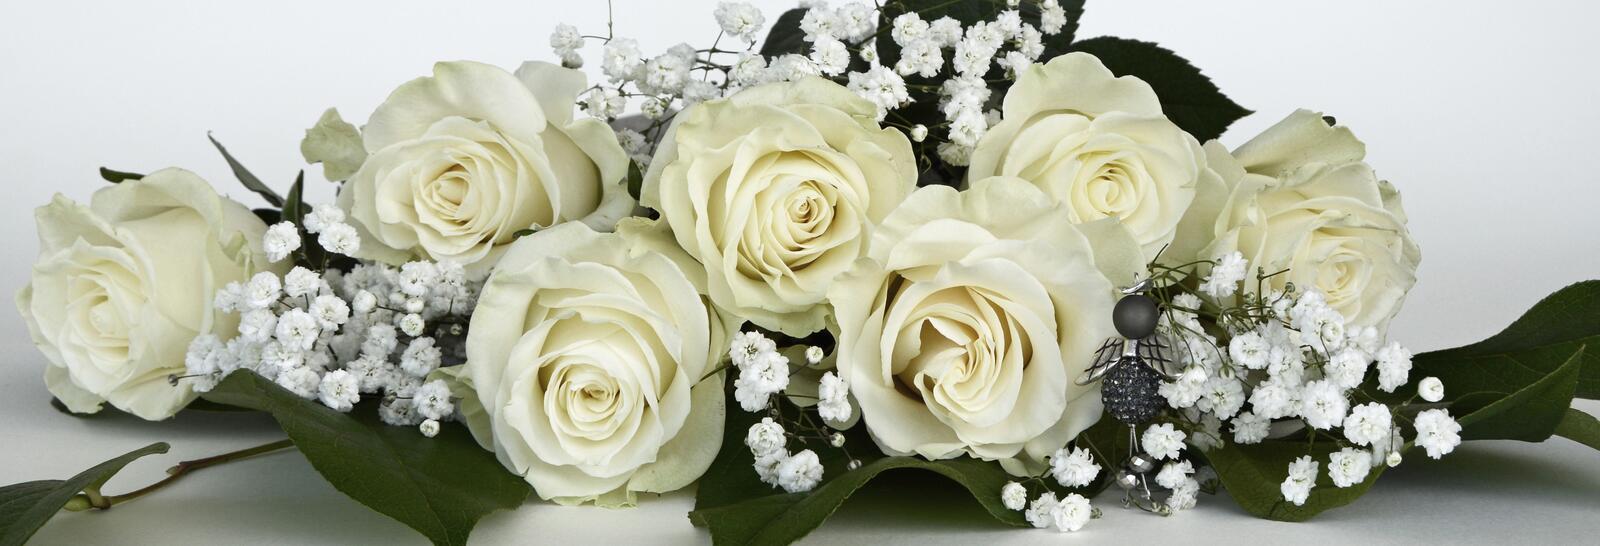 Free photo White roses